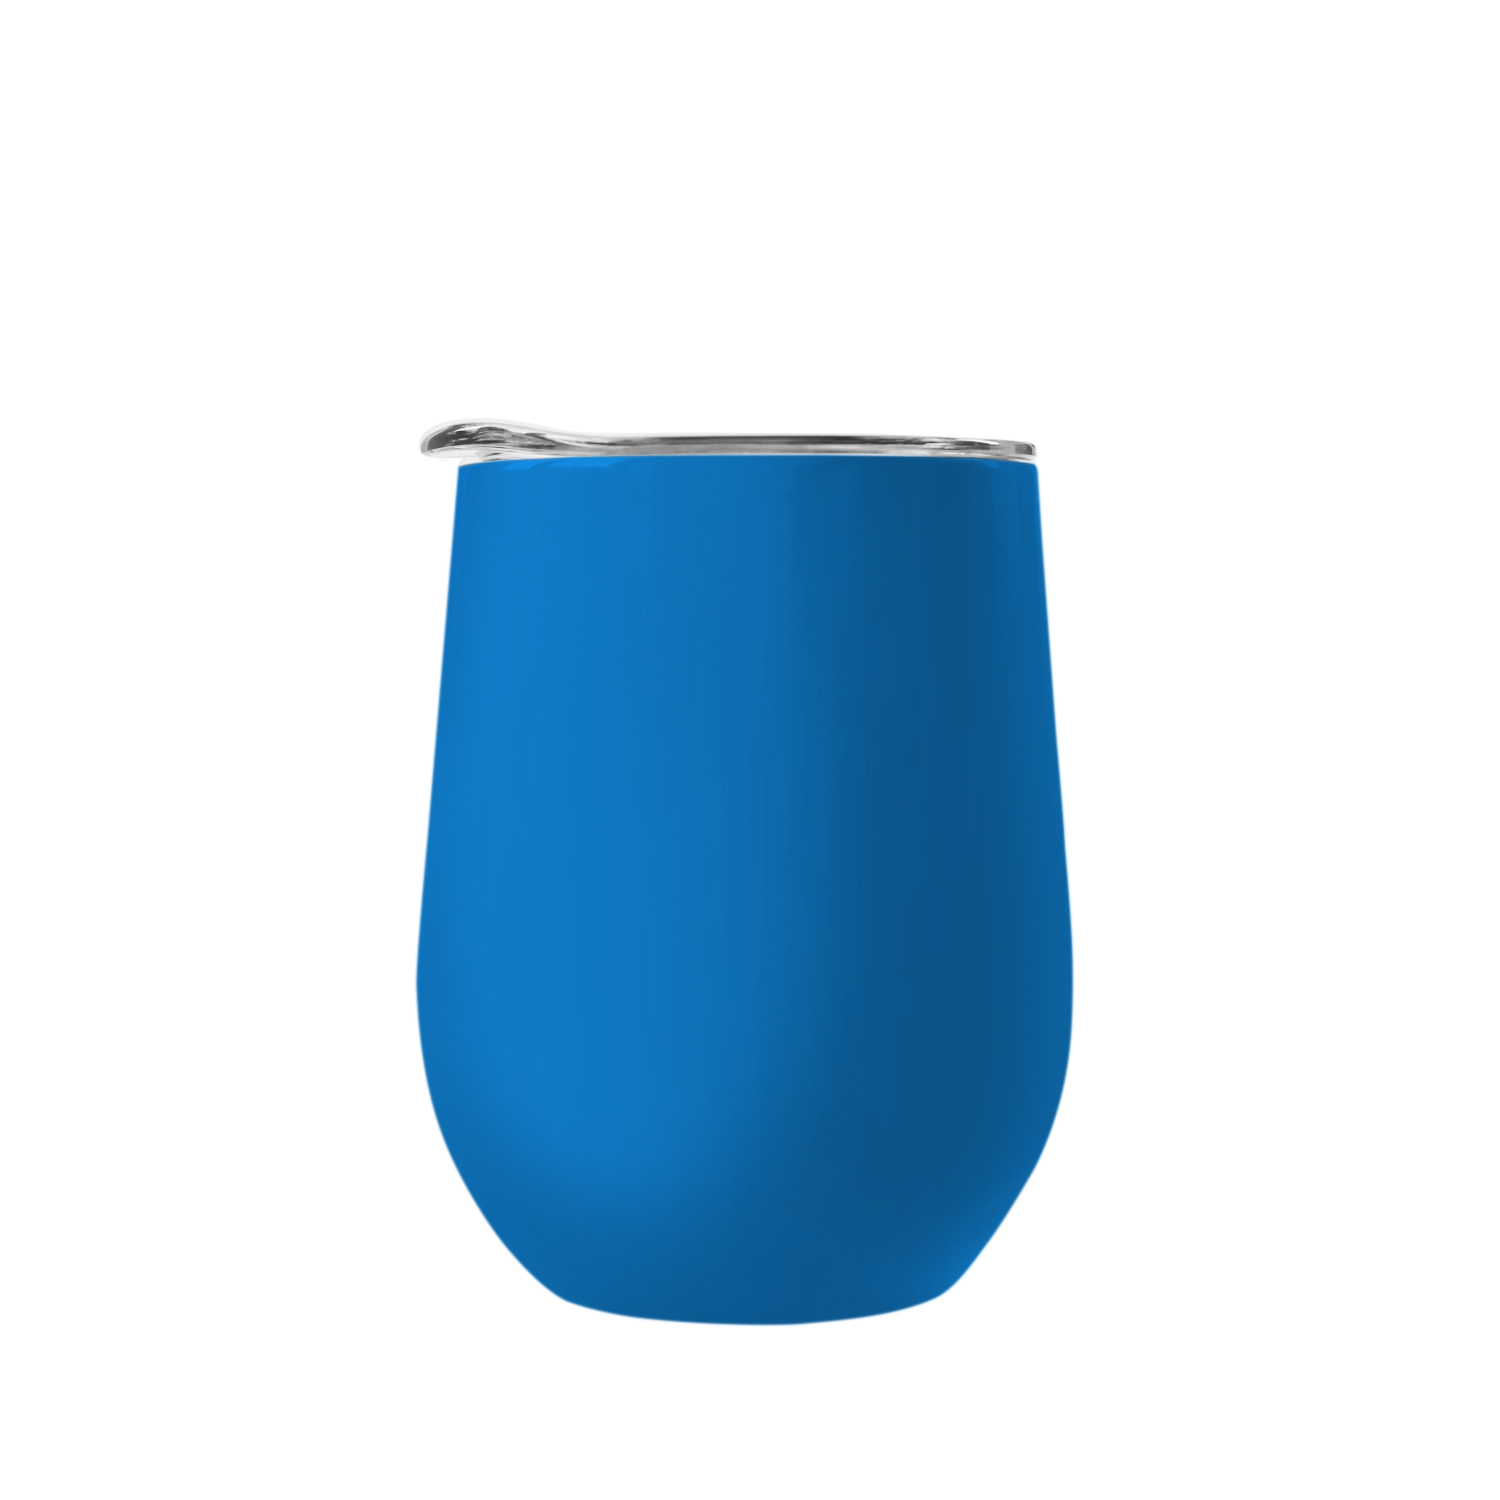 Набор Cofer Tube софт-тач CO12s grey (голубой)